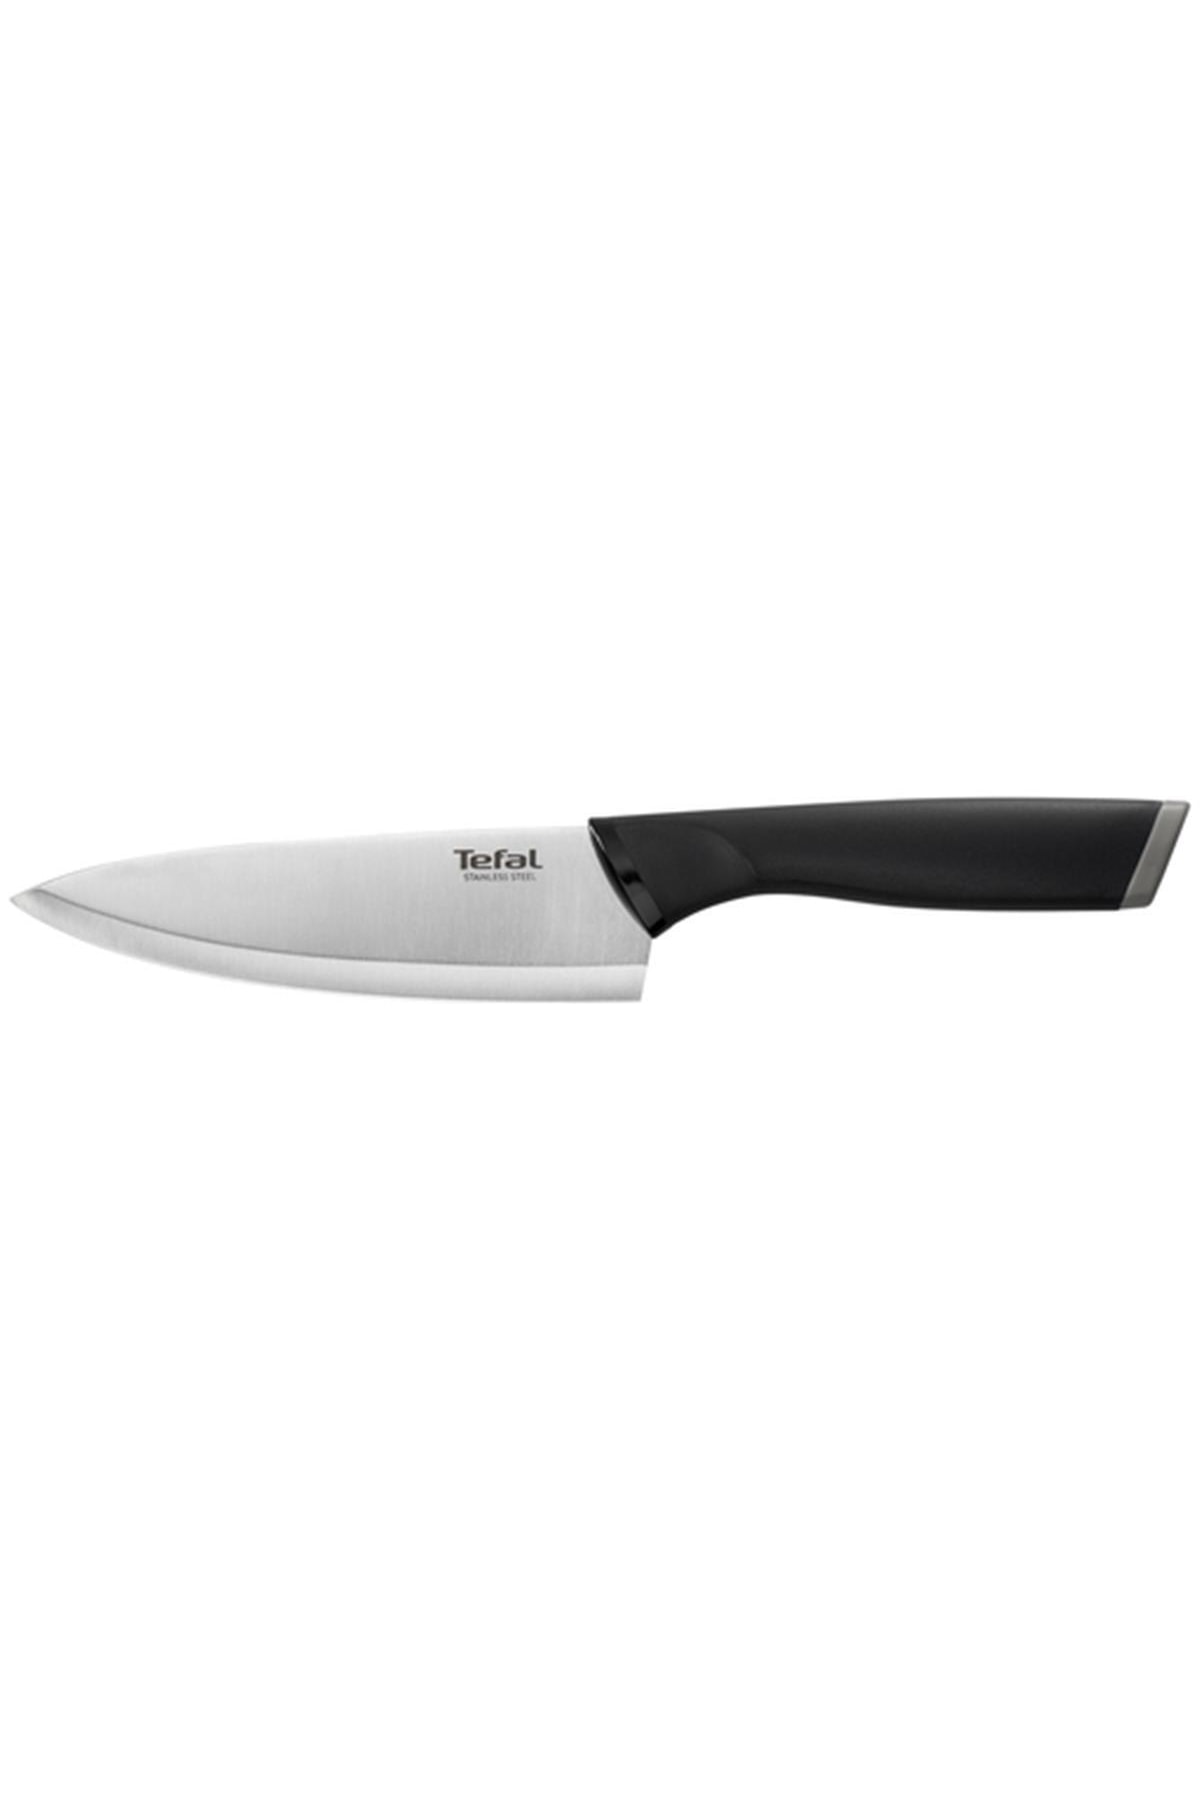 Кухонные ножи 20 см. Нож кухонный Tefal k2213204. Нож Tefal k1410274. Поварской нож Tefal k1210214. Нож поварской Tefal, 20 см.